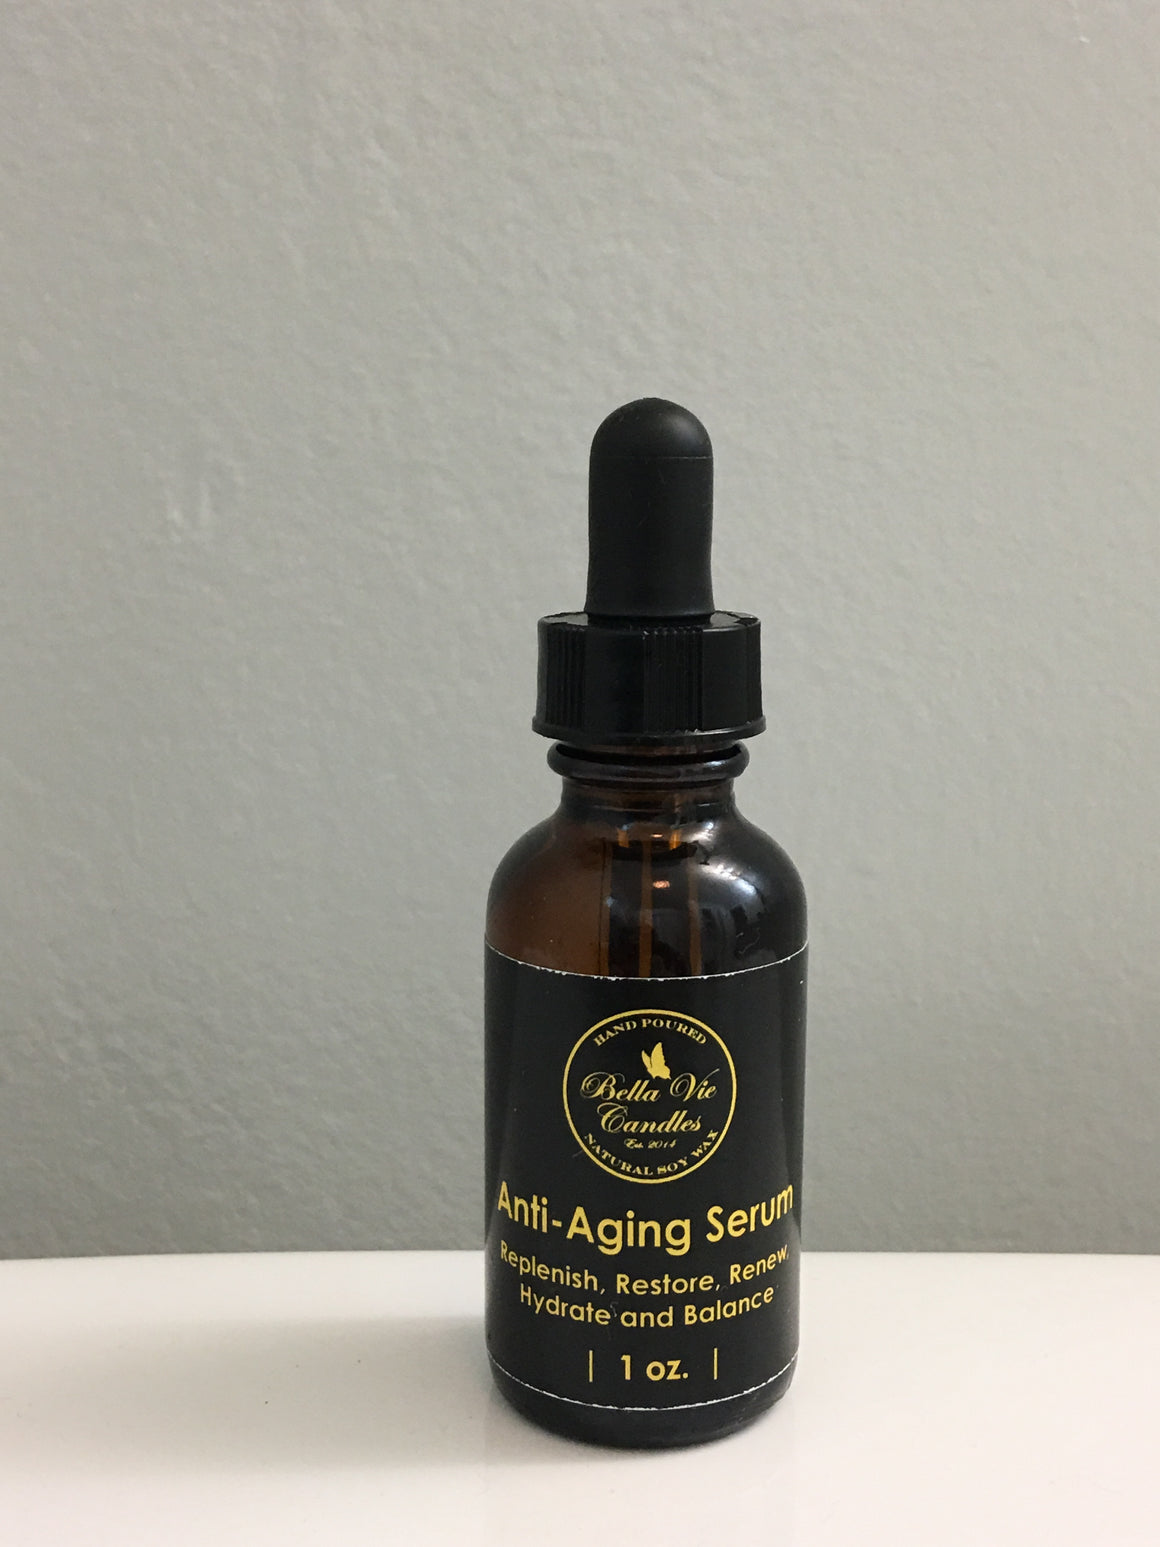 Anti-Aging Serum